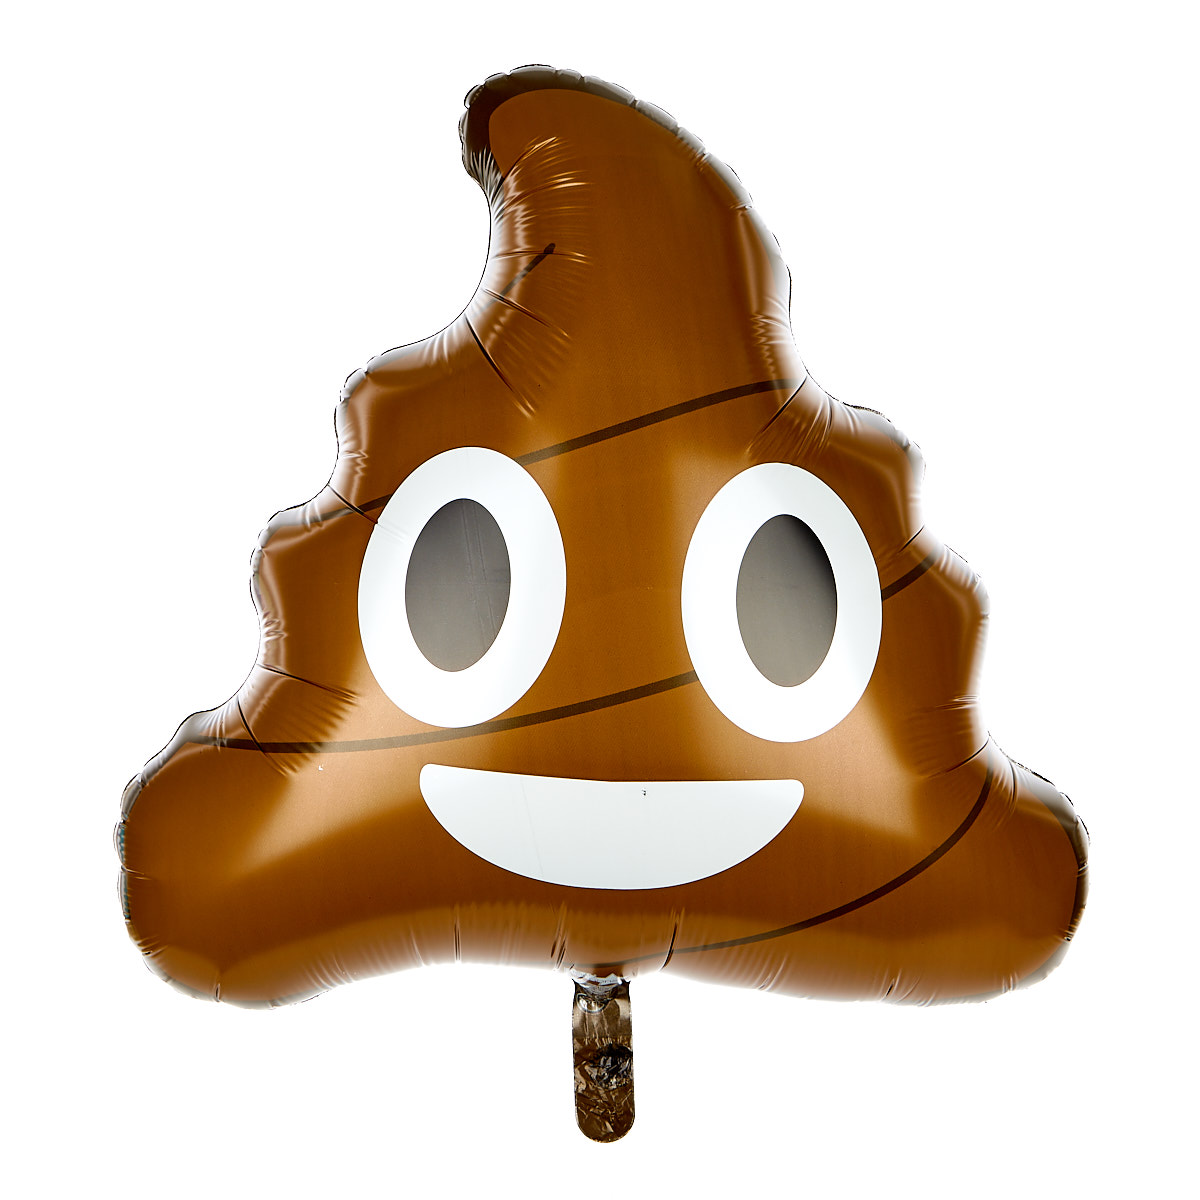 Poo Emoticon 20-Inch Foil Helium Balloon